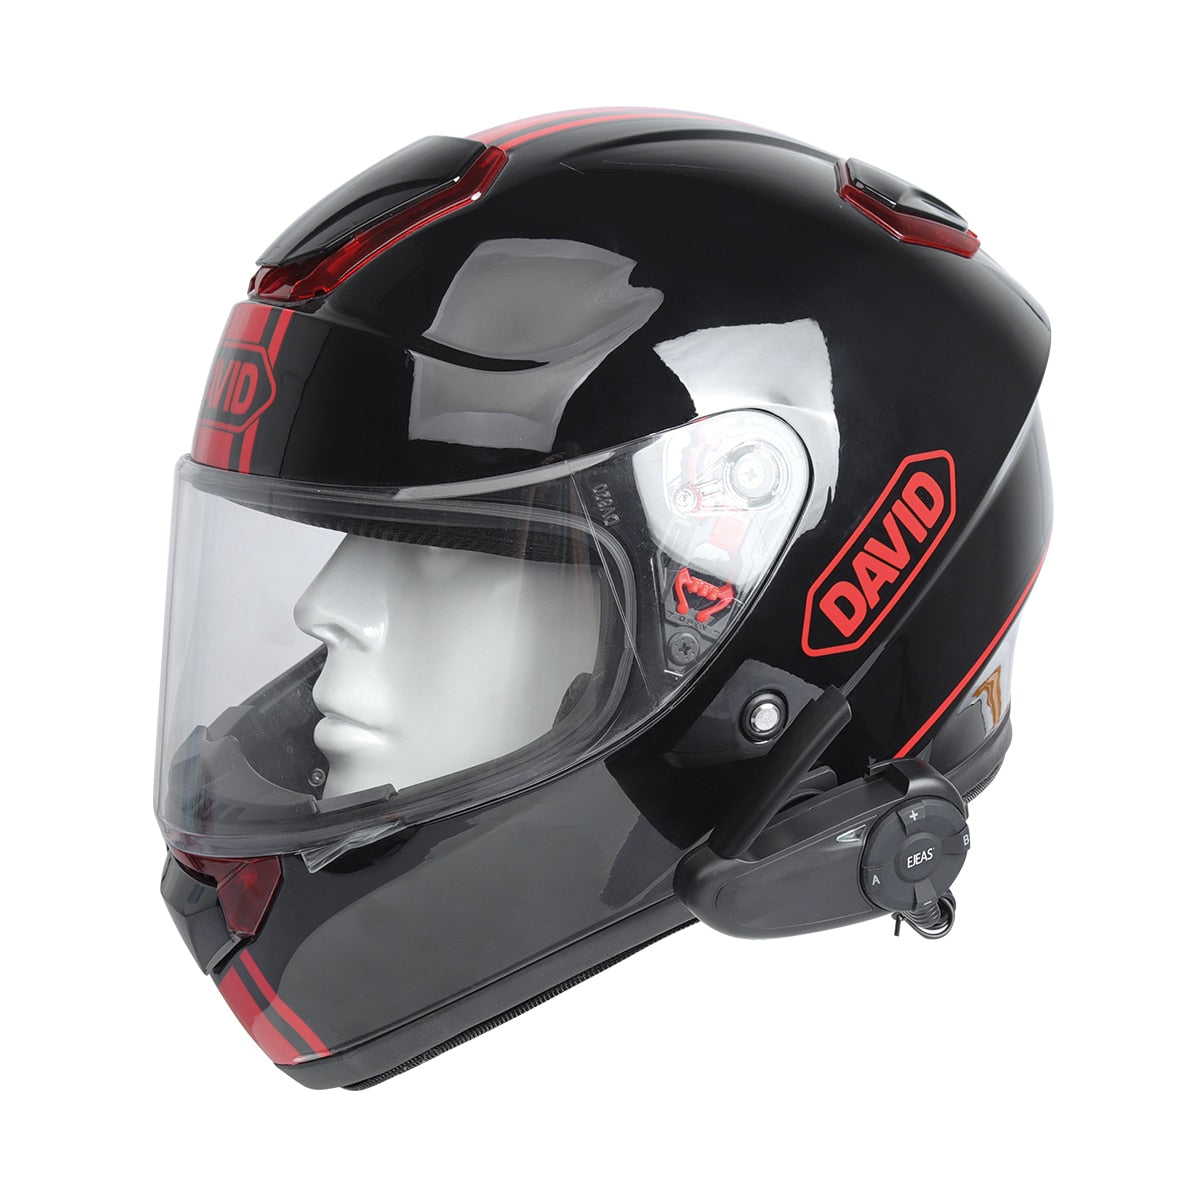 EJEAS Q7 Motorcycle Helmet Bluetooth 5.0 Intercom Headsets Remote Control Hands-Free Wireless Intercomunicadores Music Type C - youronestopstore23